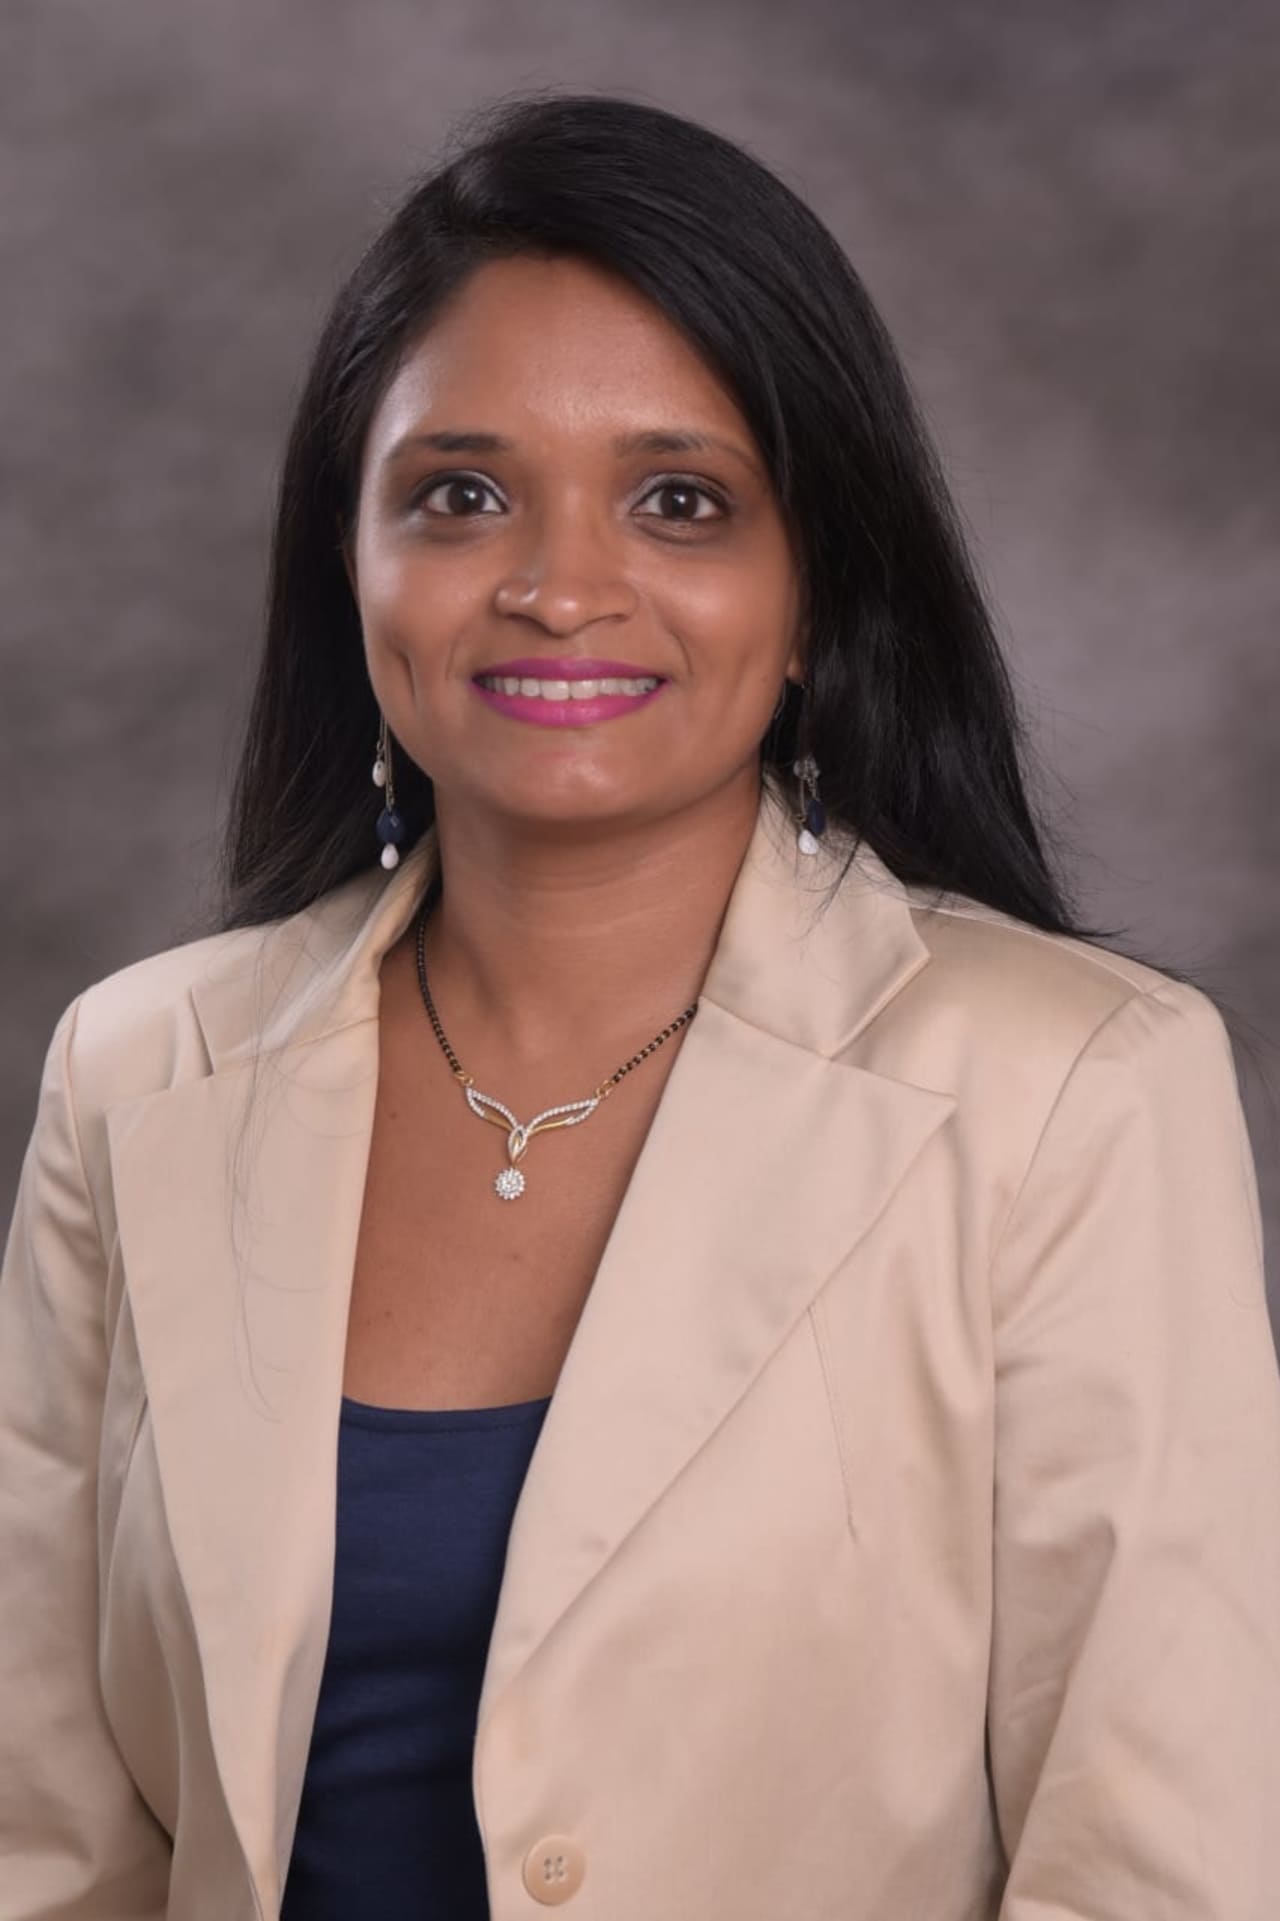 Vascular surgeon Dr. Ratna Chandana Singh has joined White Plains Hospital's Physician Associates team.